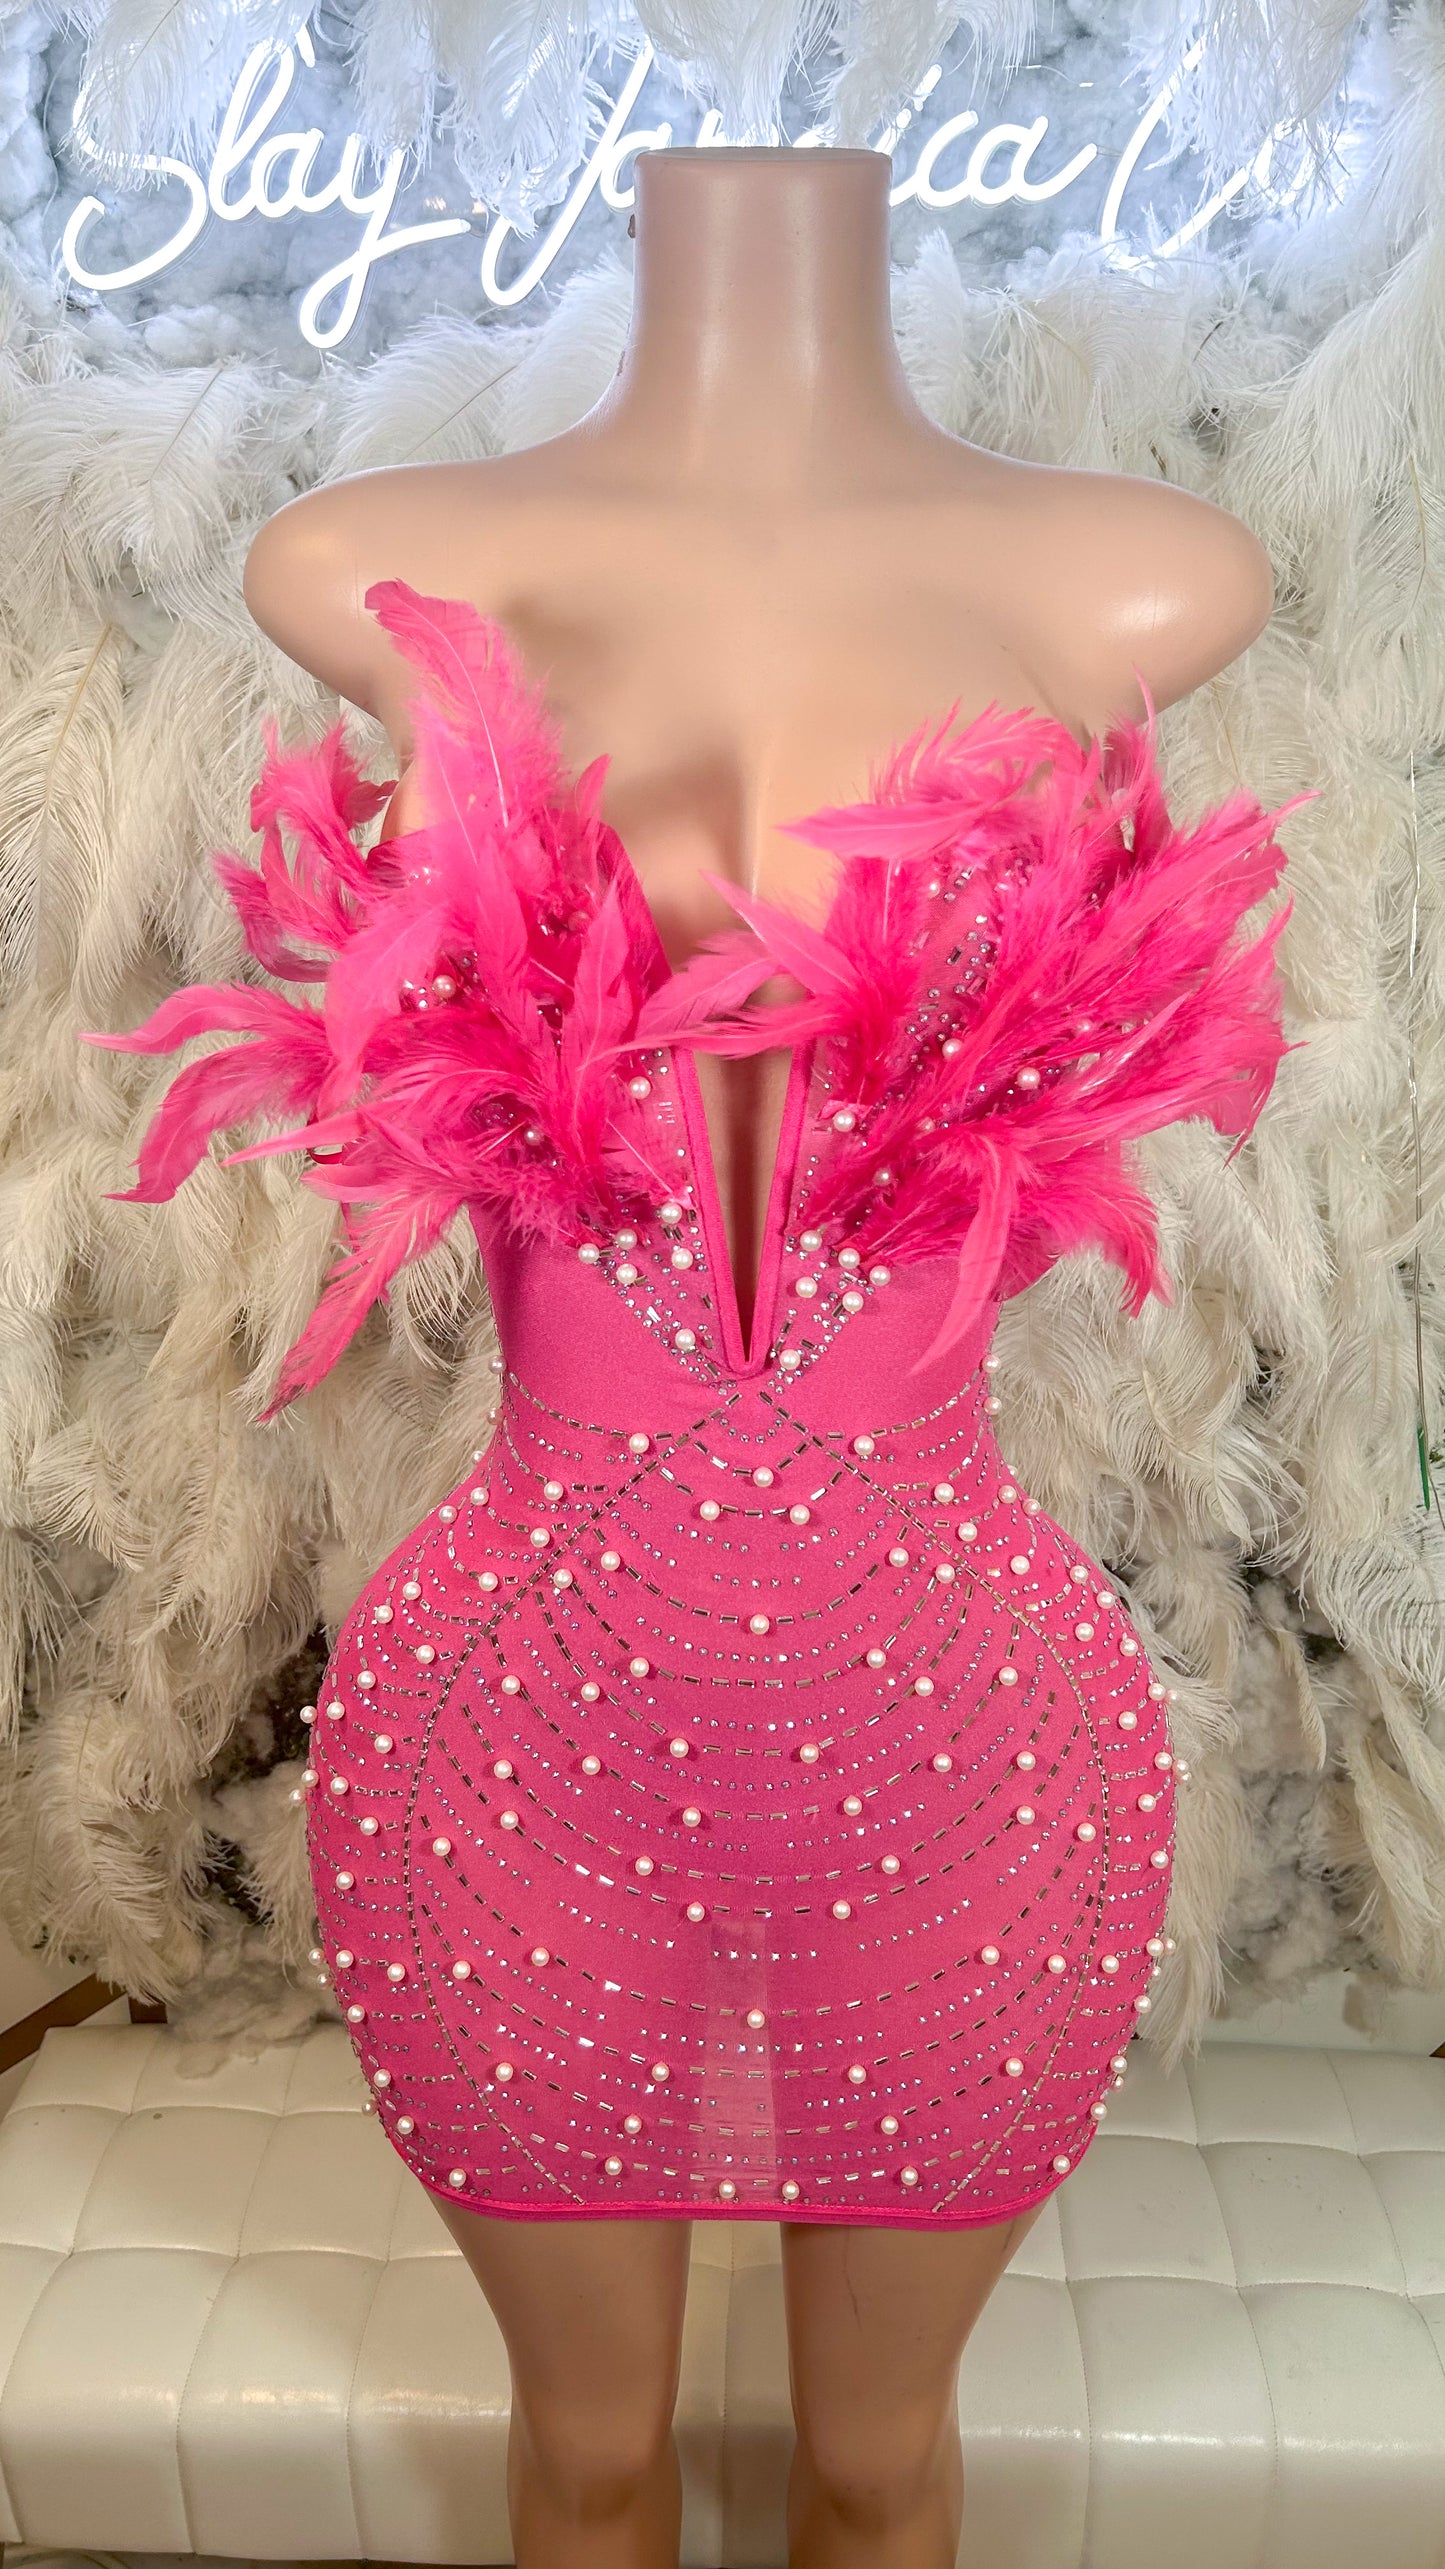 Baddest In The Room Pearl Mesh Mini Dress - Pink